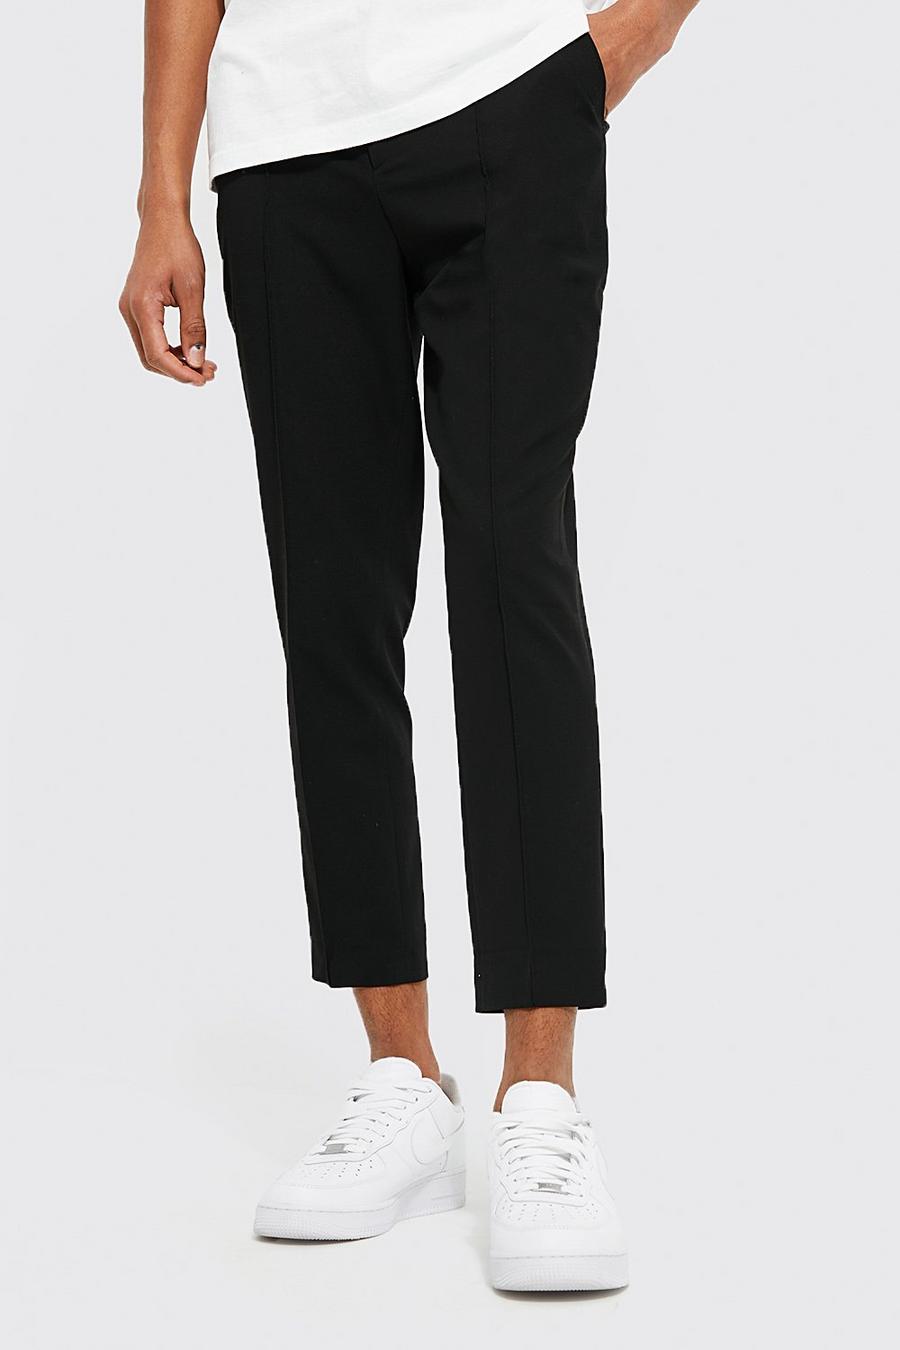 Black negro Skinny Plain Tapered Smart Trouser With Pintuck